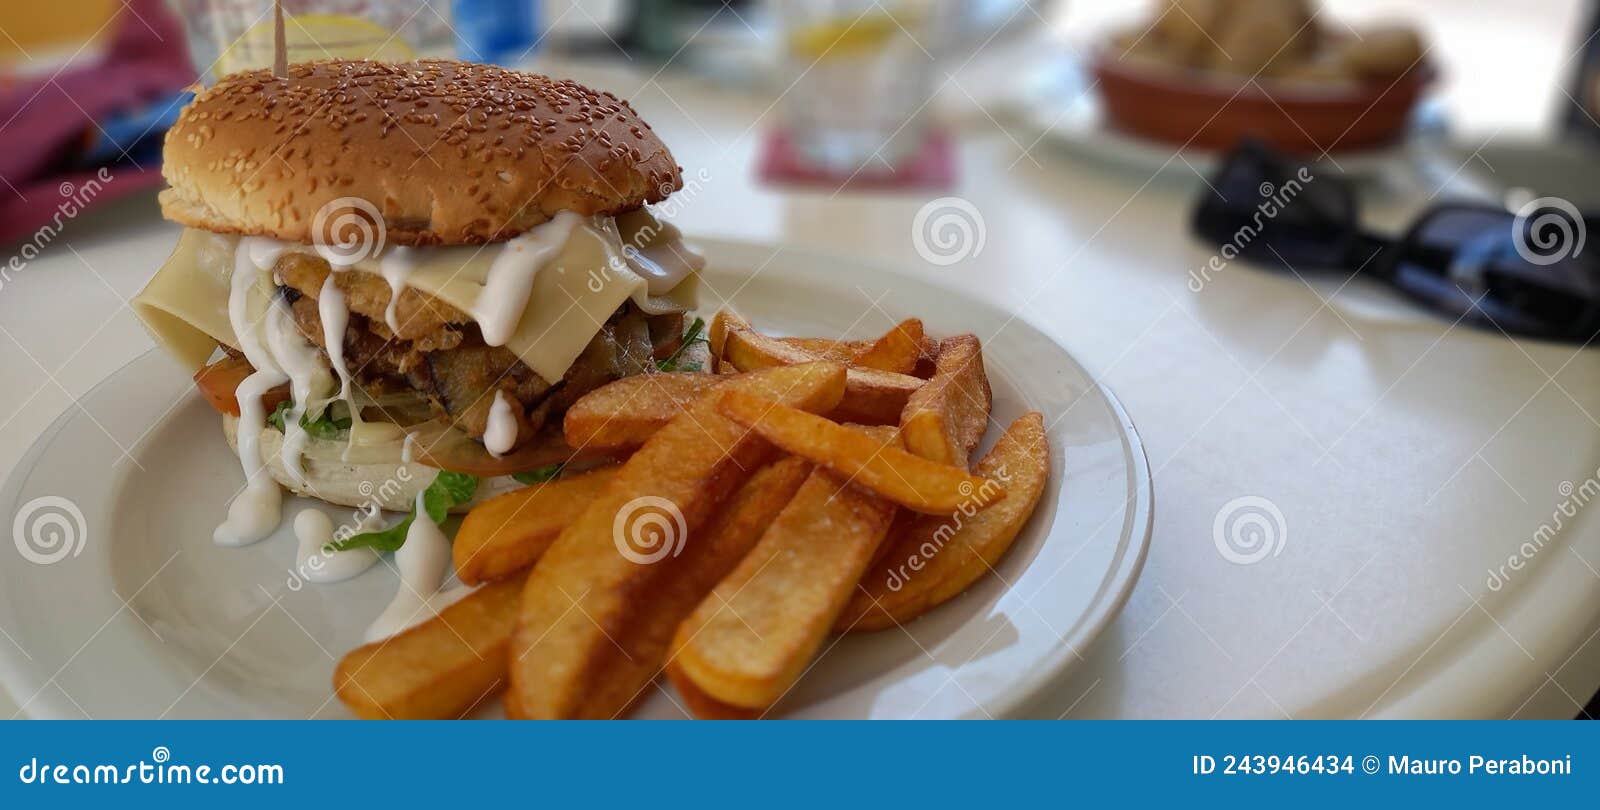 hamburger vegano con melanzane fritte e patatine